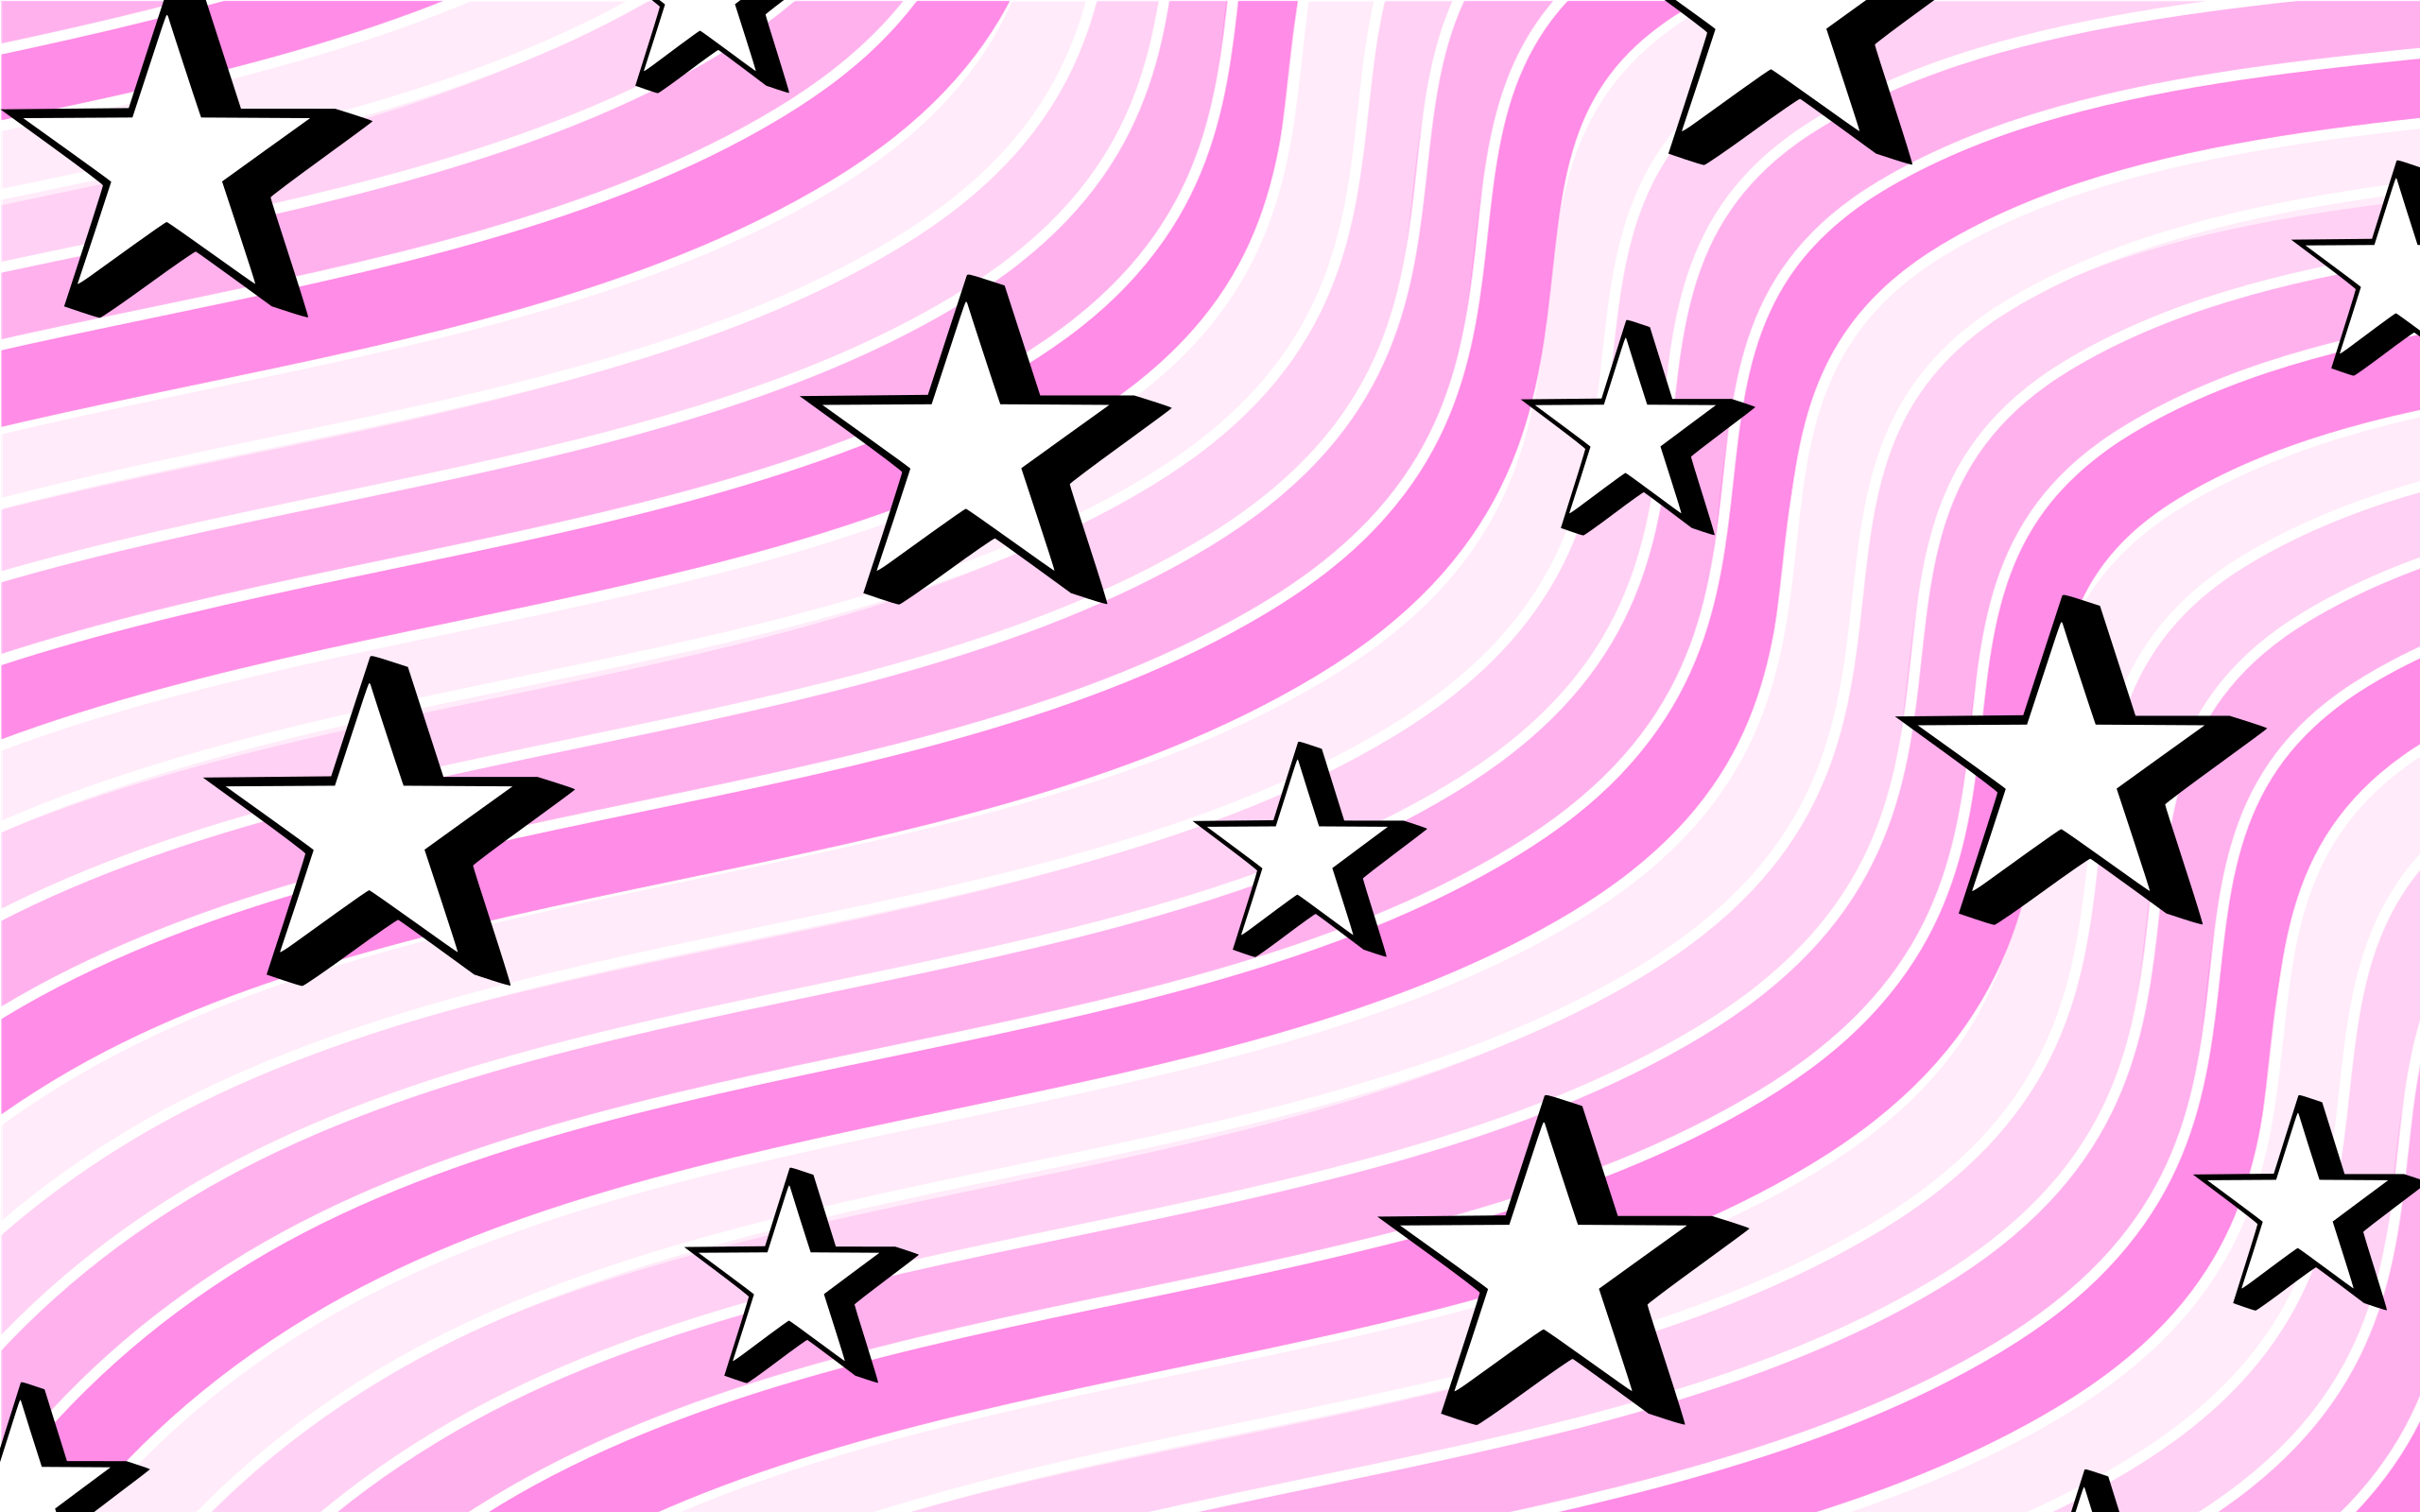 Aesthetic Pink Star Swirls Background iPhone Wallpaper